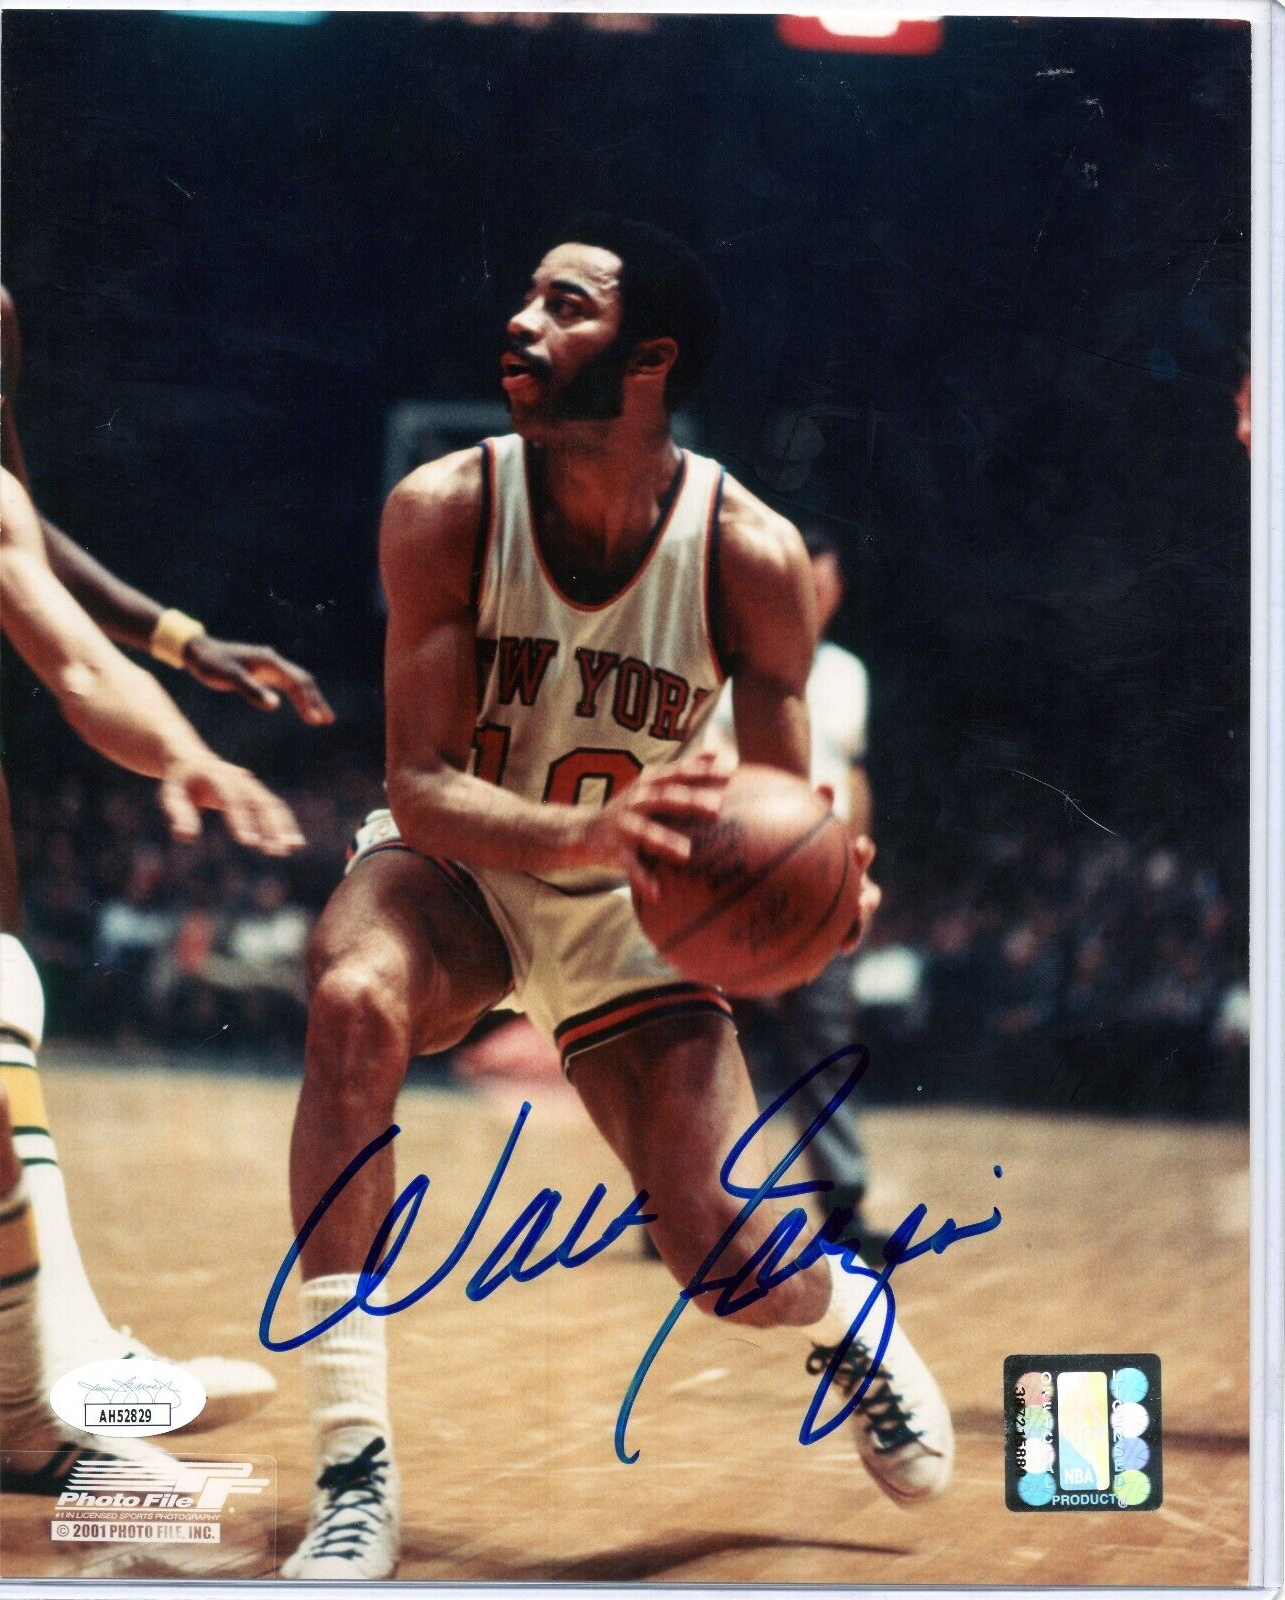 Walt Frazier Autographed Signed 8X10 Photo Auto Autograph JSA COA New York Knicks Passing